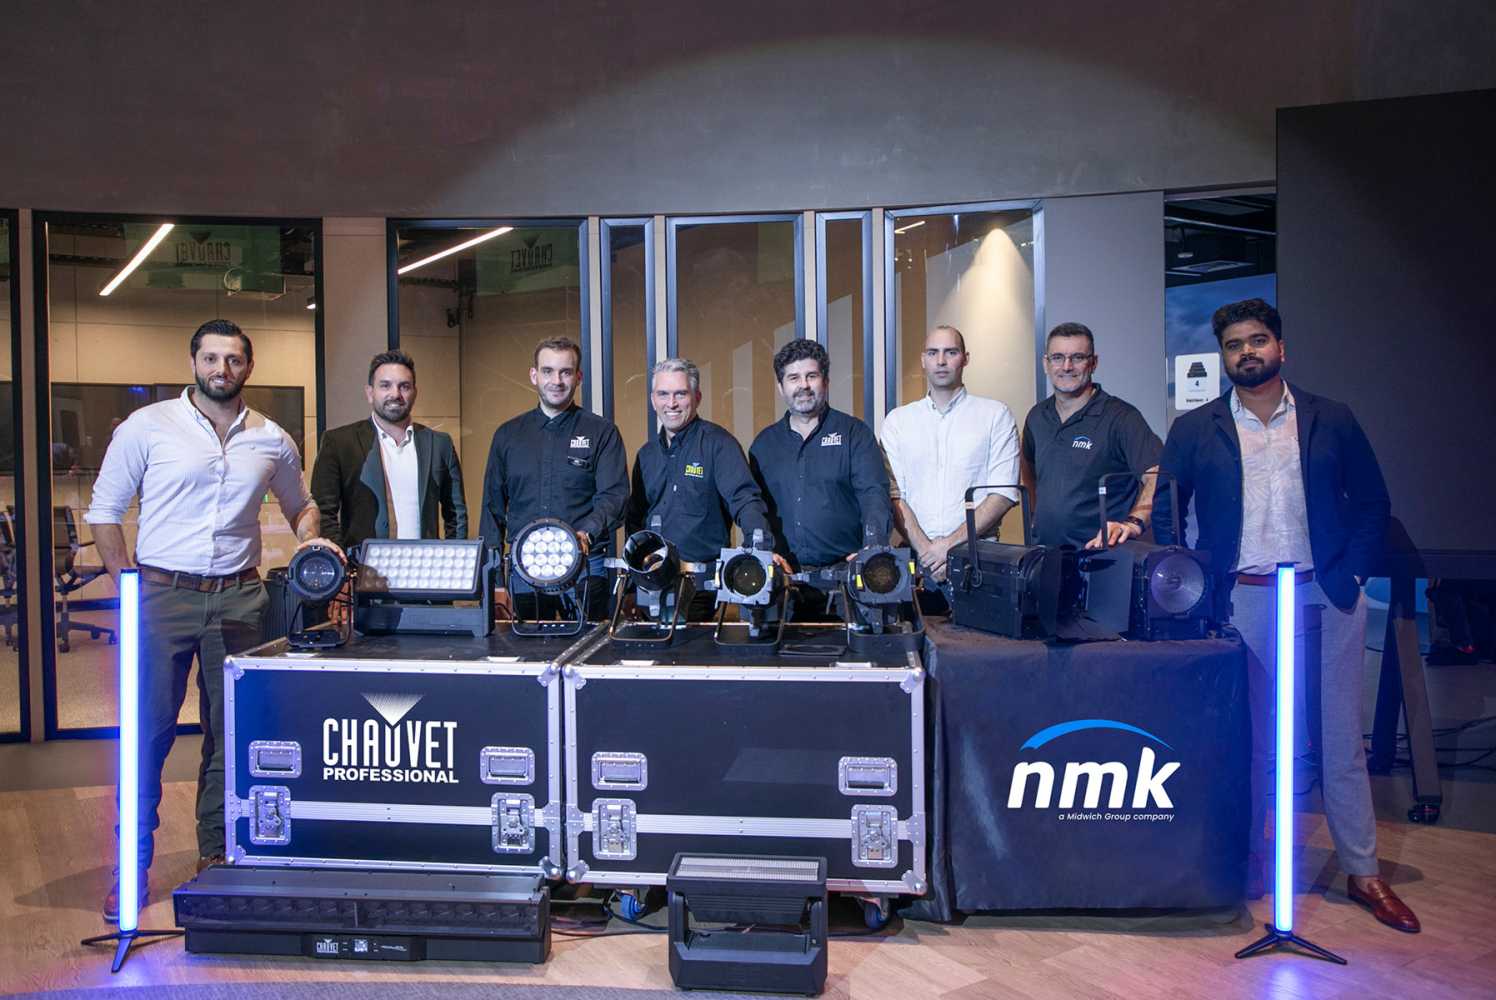 NMK is now the distributor of Chauvet products in the UAE, Oman, Kuwait, Bahrain, Saudi Arabia and Qatar